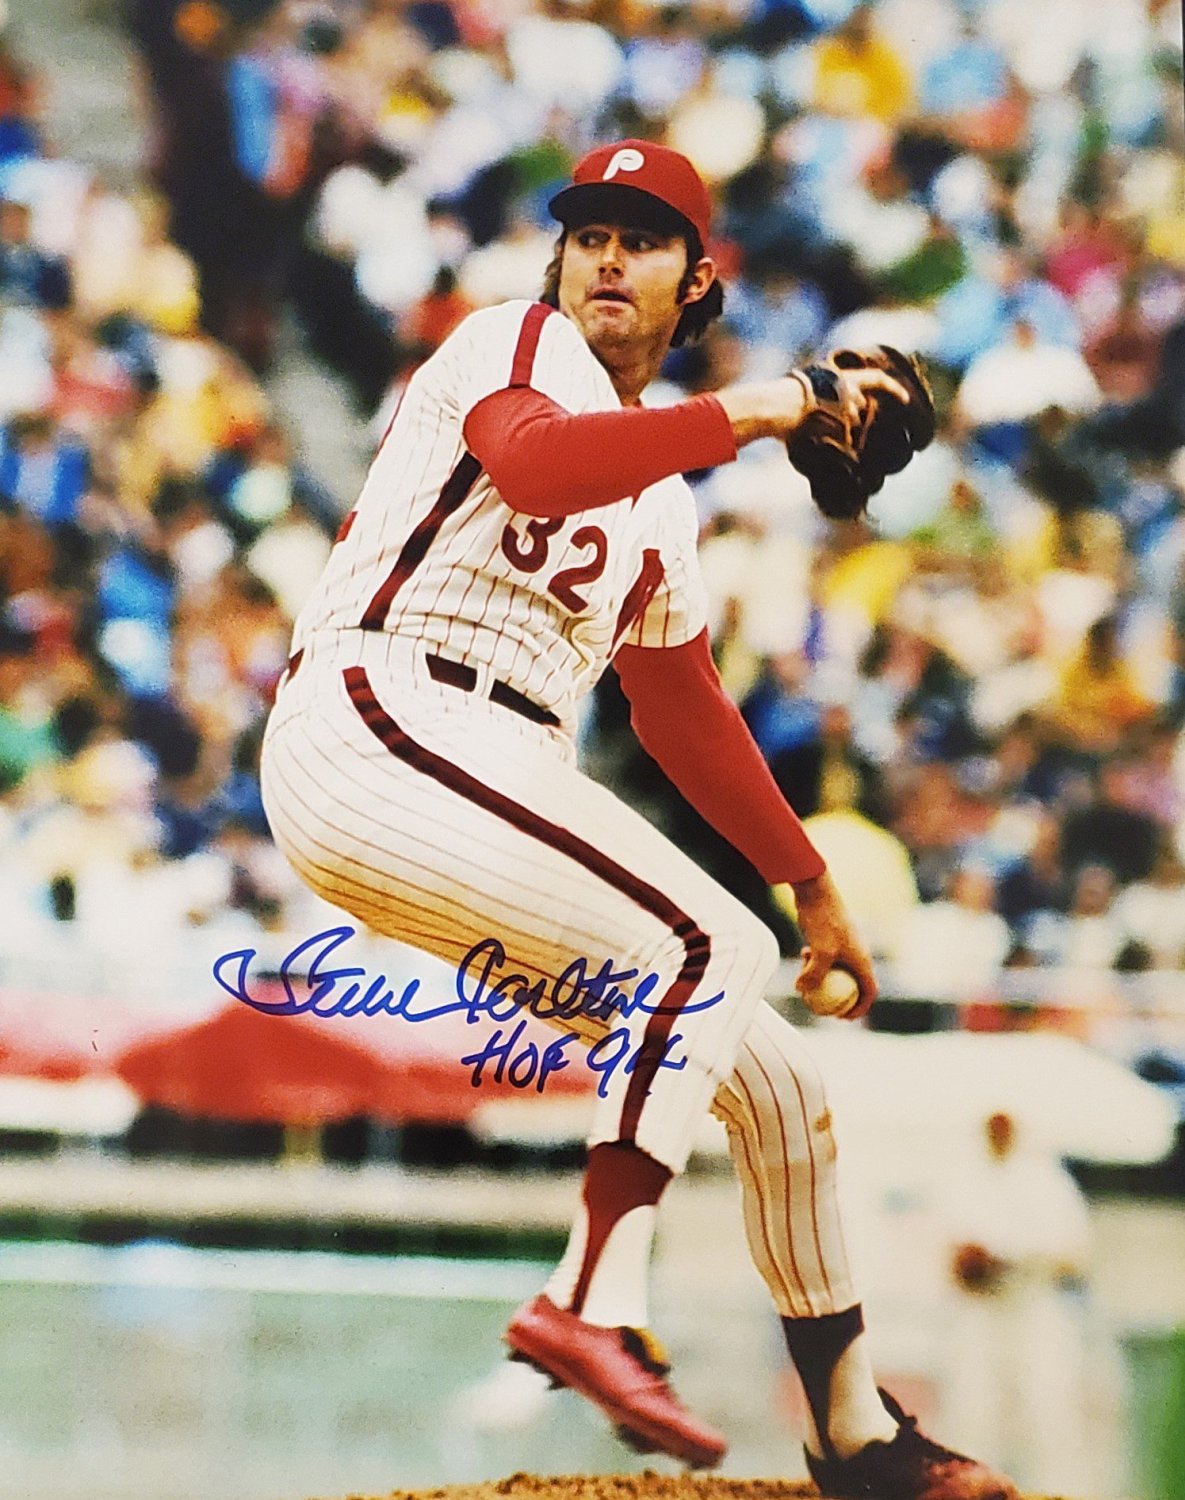 Steve Carlton Autographed Signed HOF 94 11X14 Philadelphia Phillies Photo -  Autographs